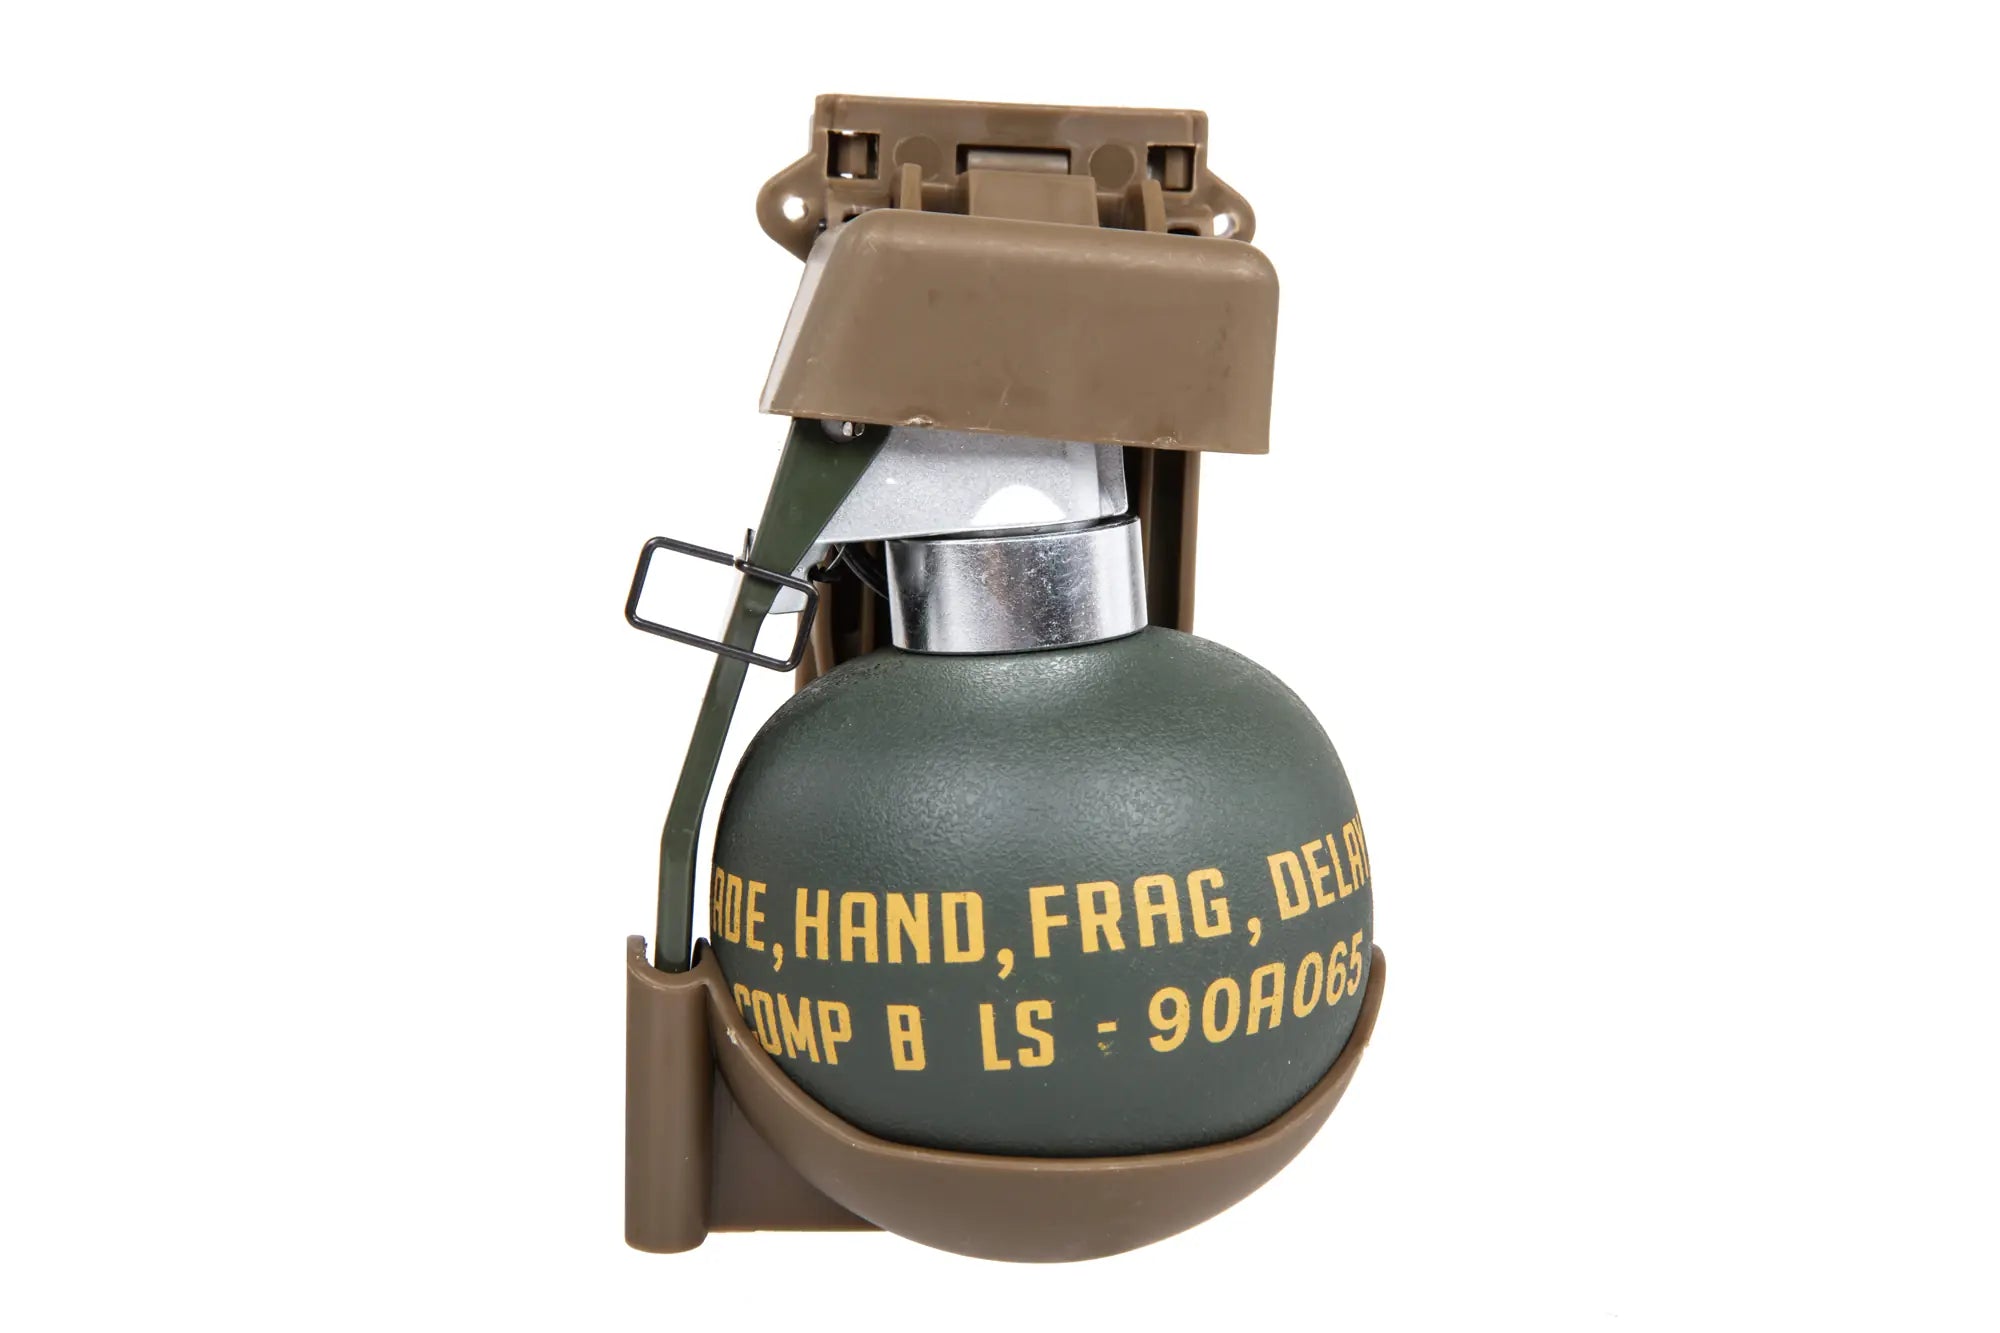 M67 fragmentation grenade dummy with Tan loader-3